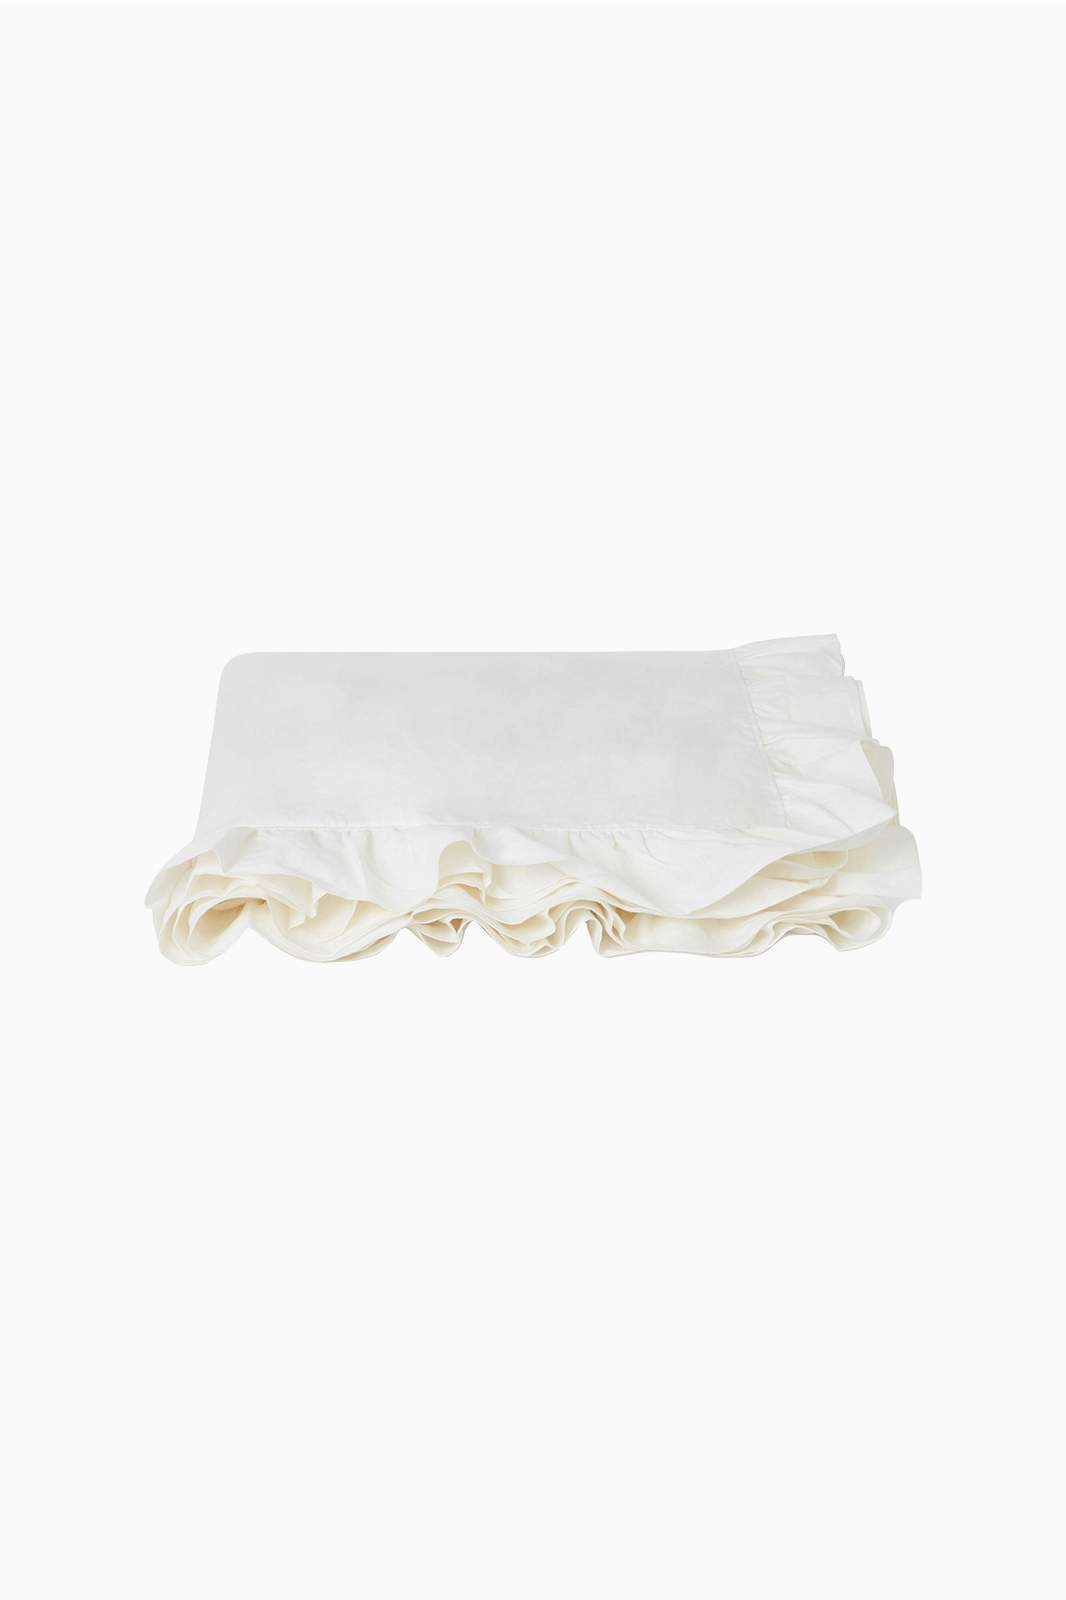 arkitaip Bedding 180 x 260cm / White The Ruffled Casita Linen Flat Sheet in White